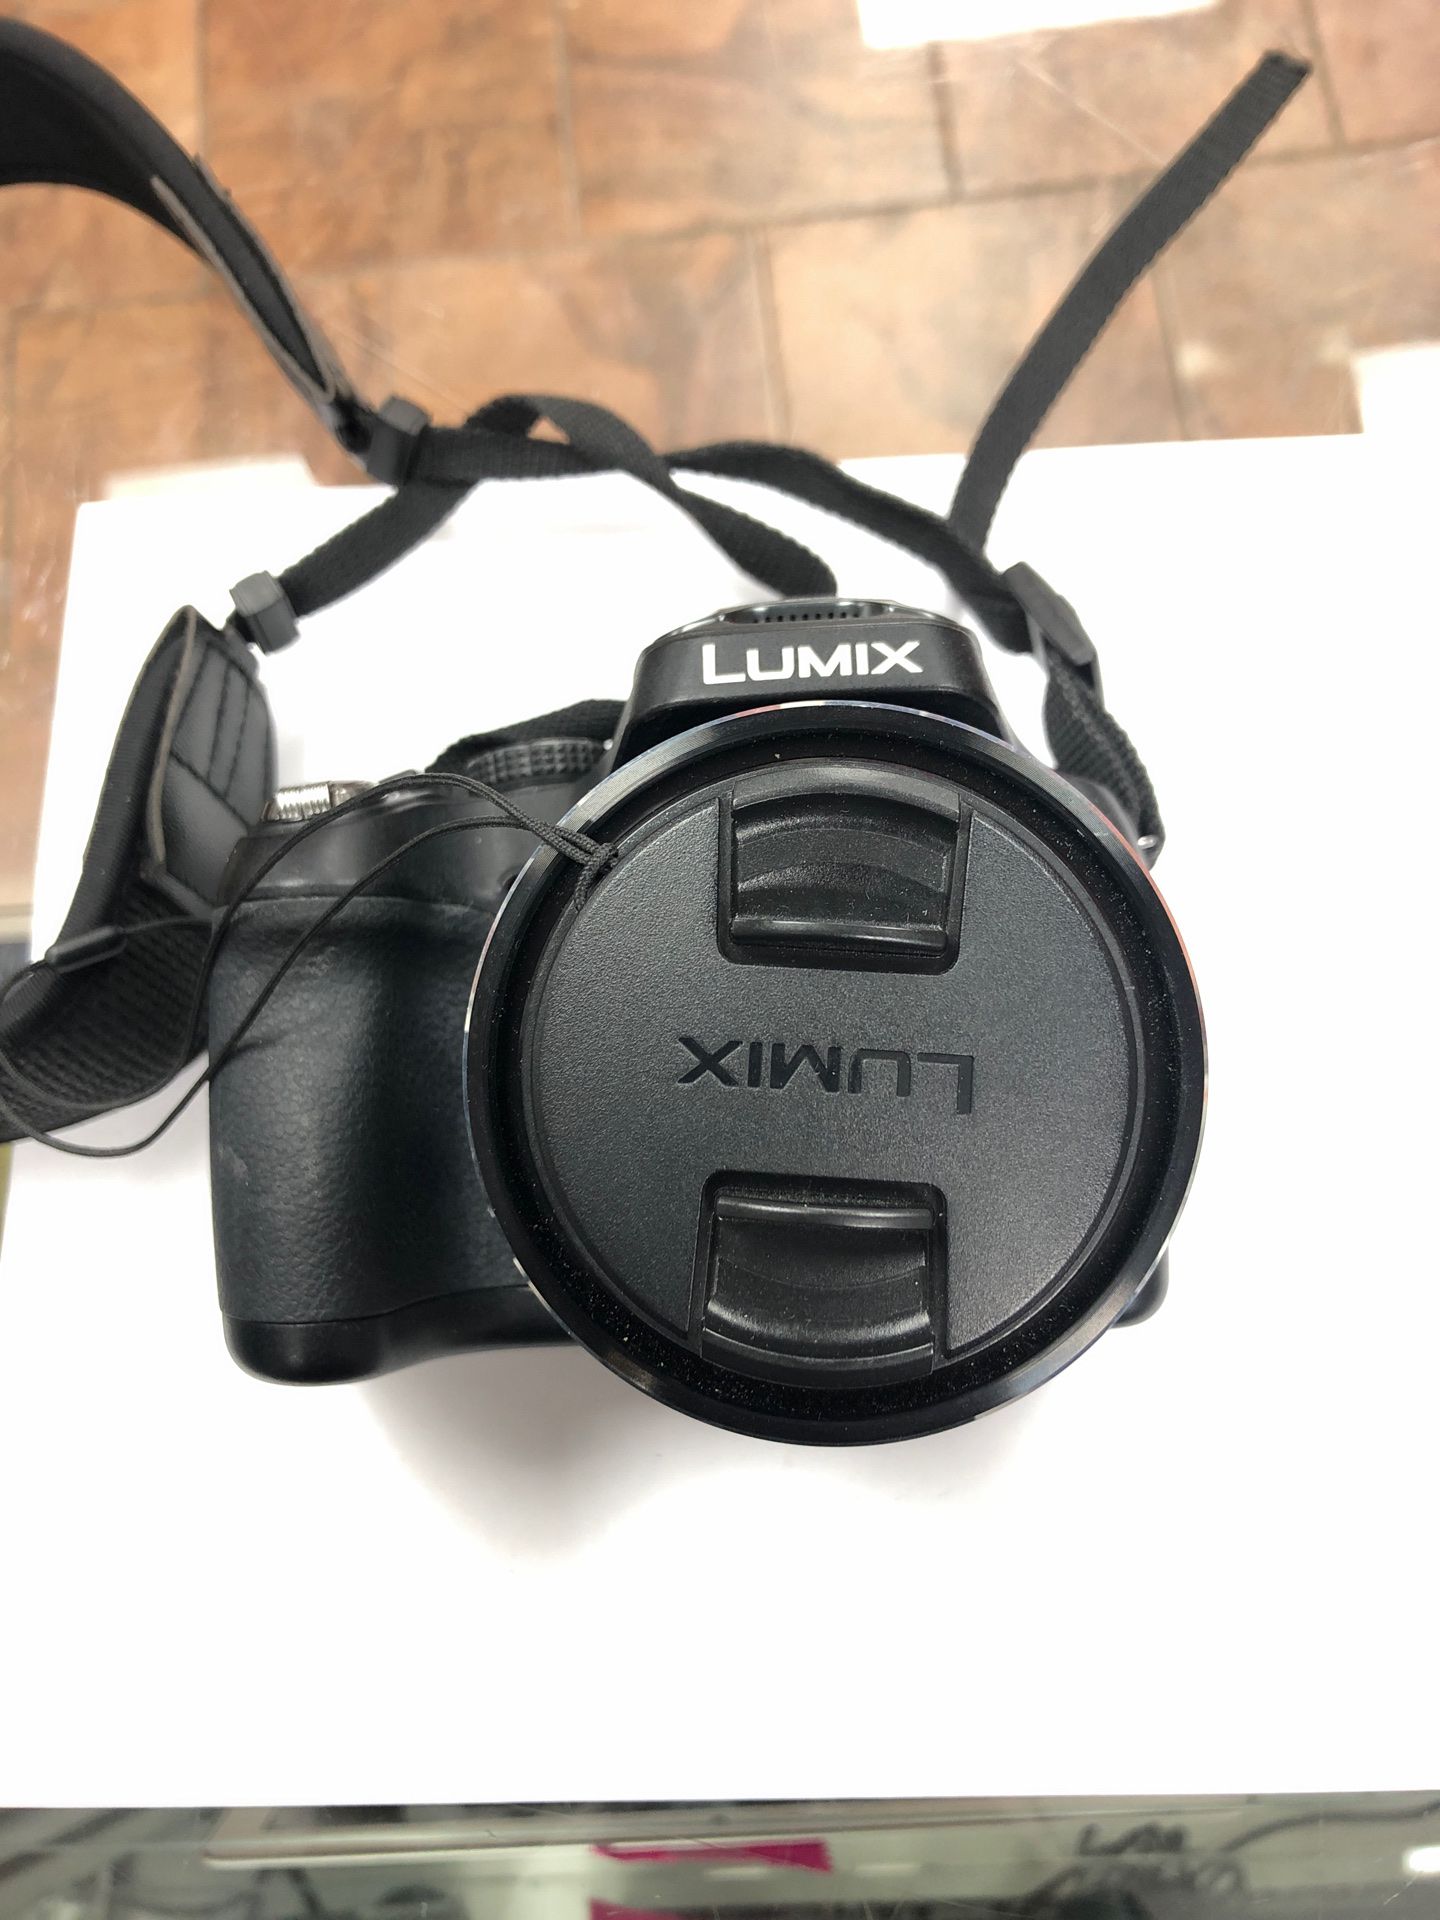 LUMIX Digital Camera - Case Included